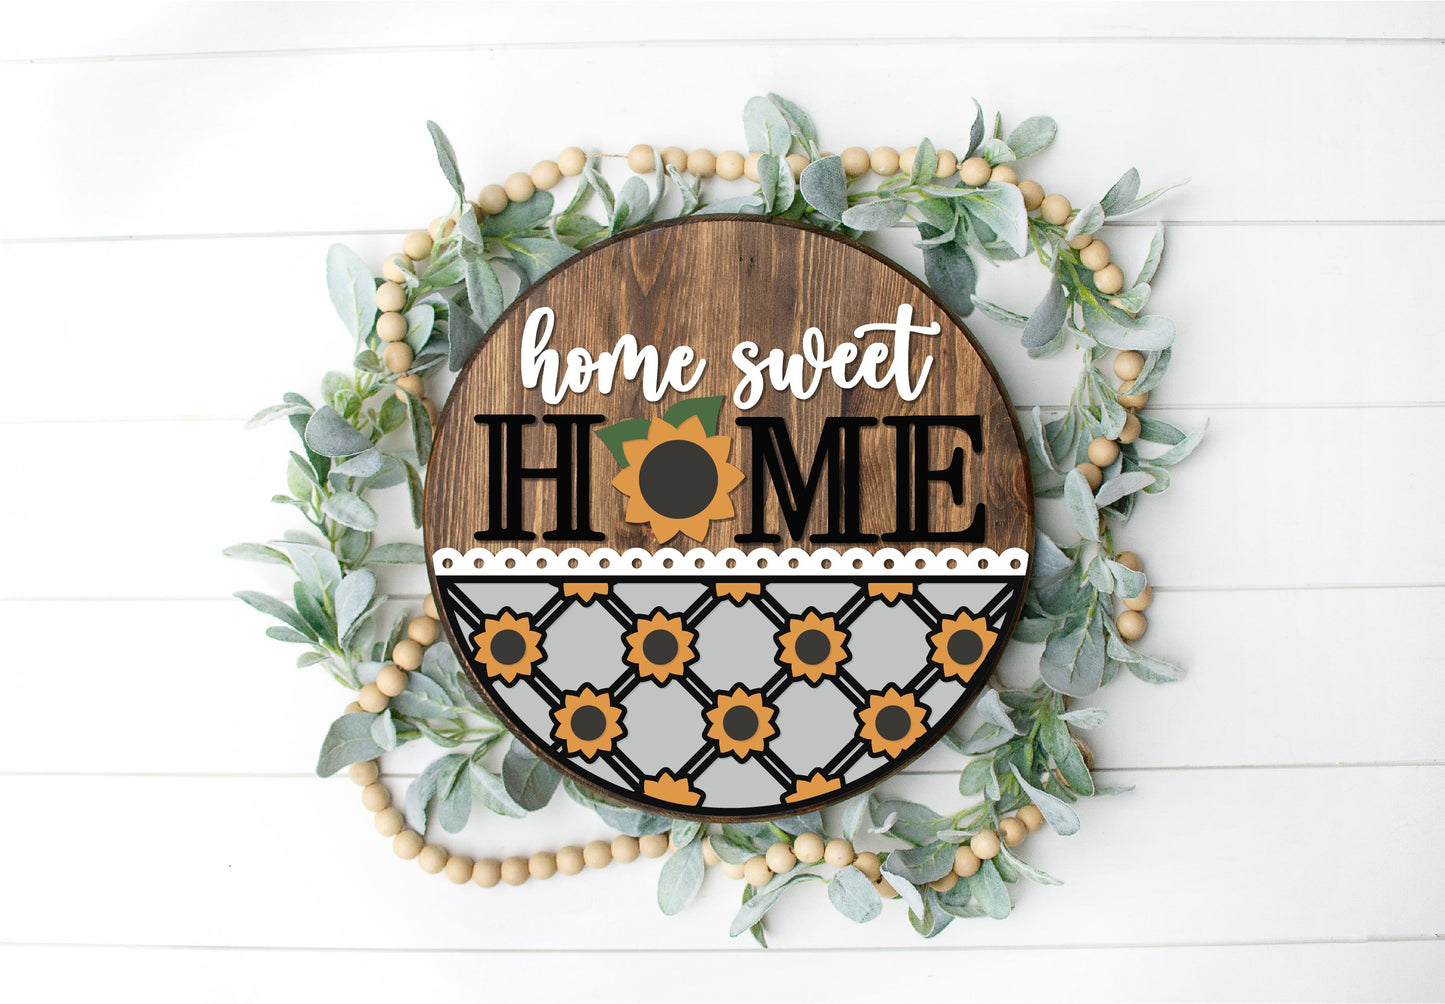 Sunflower Home sweet home DIY sign